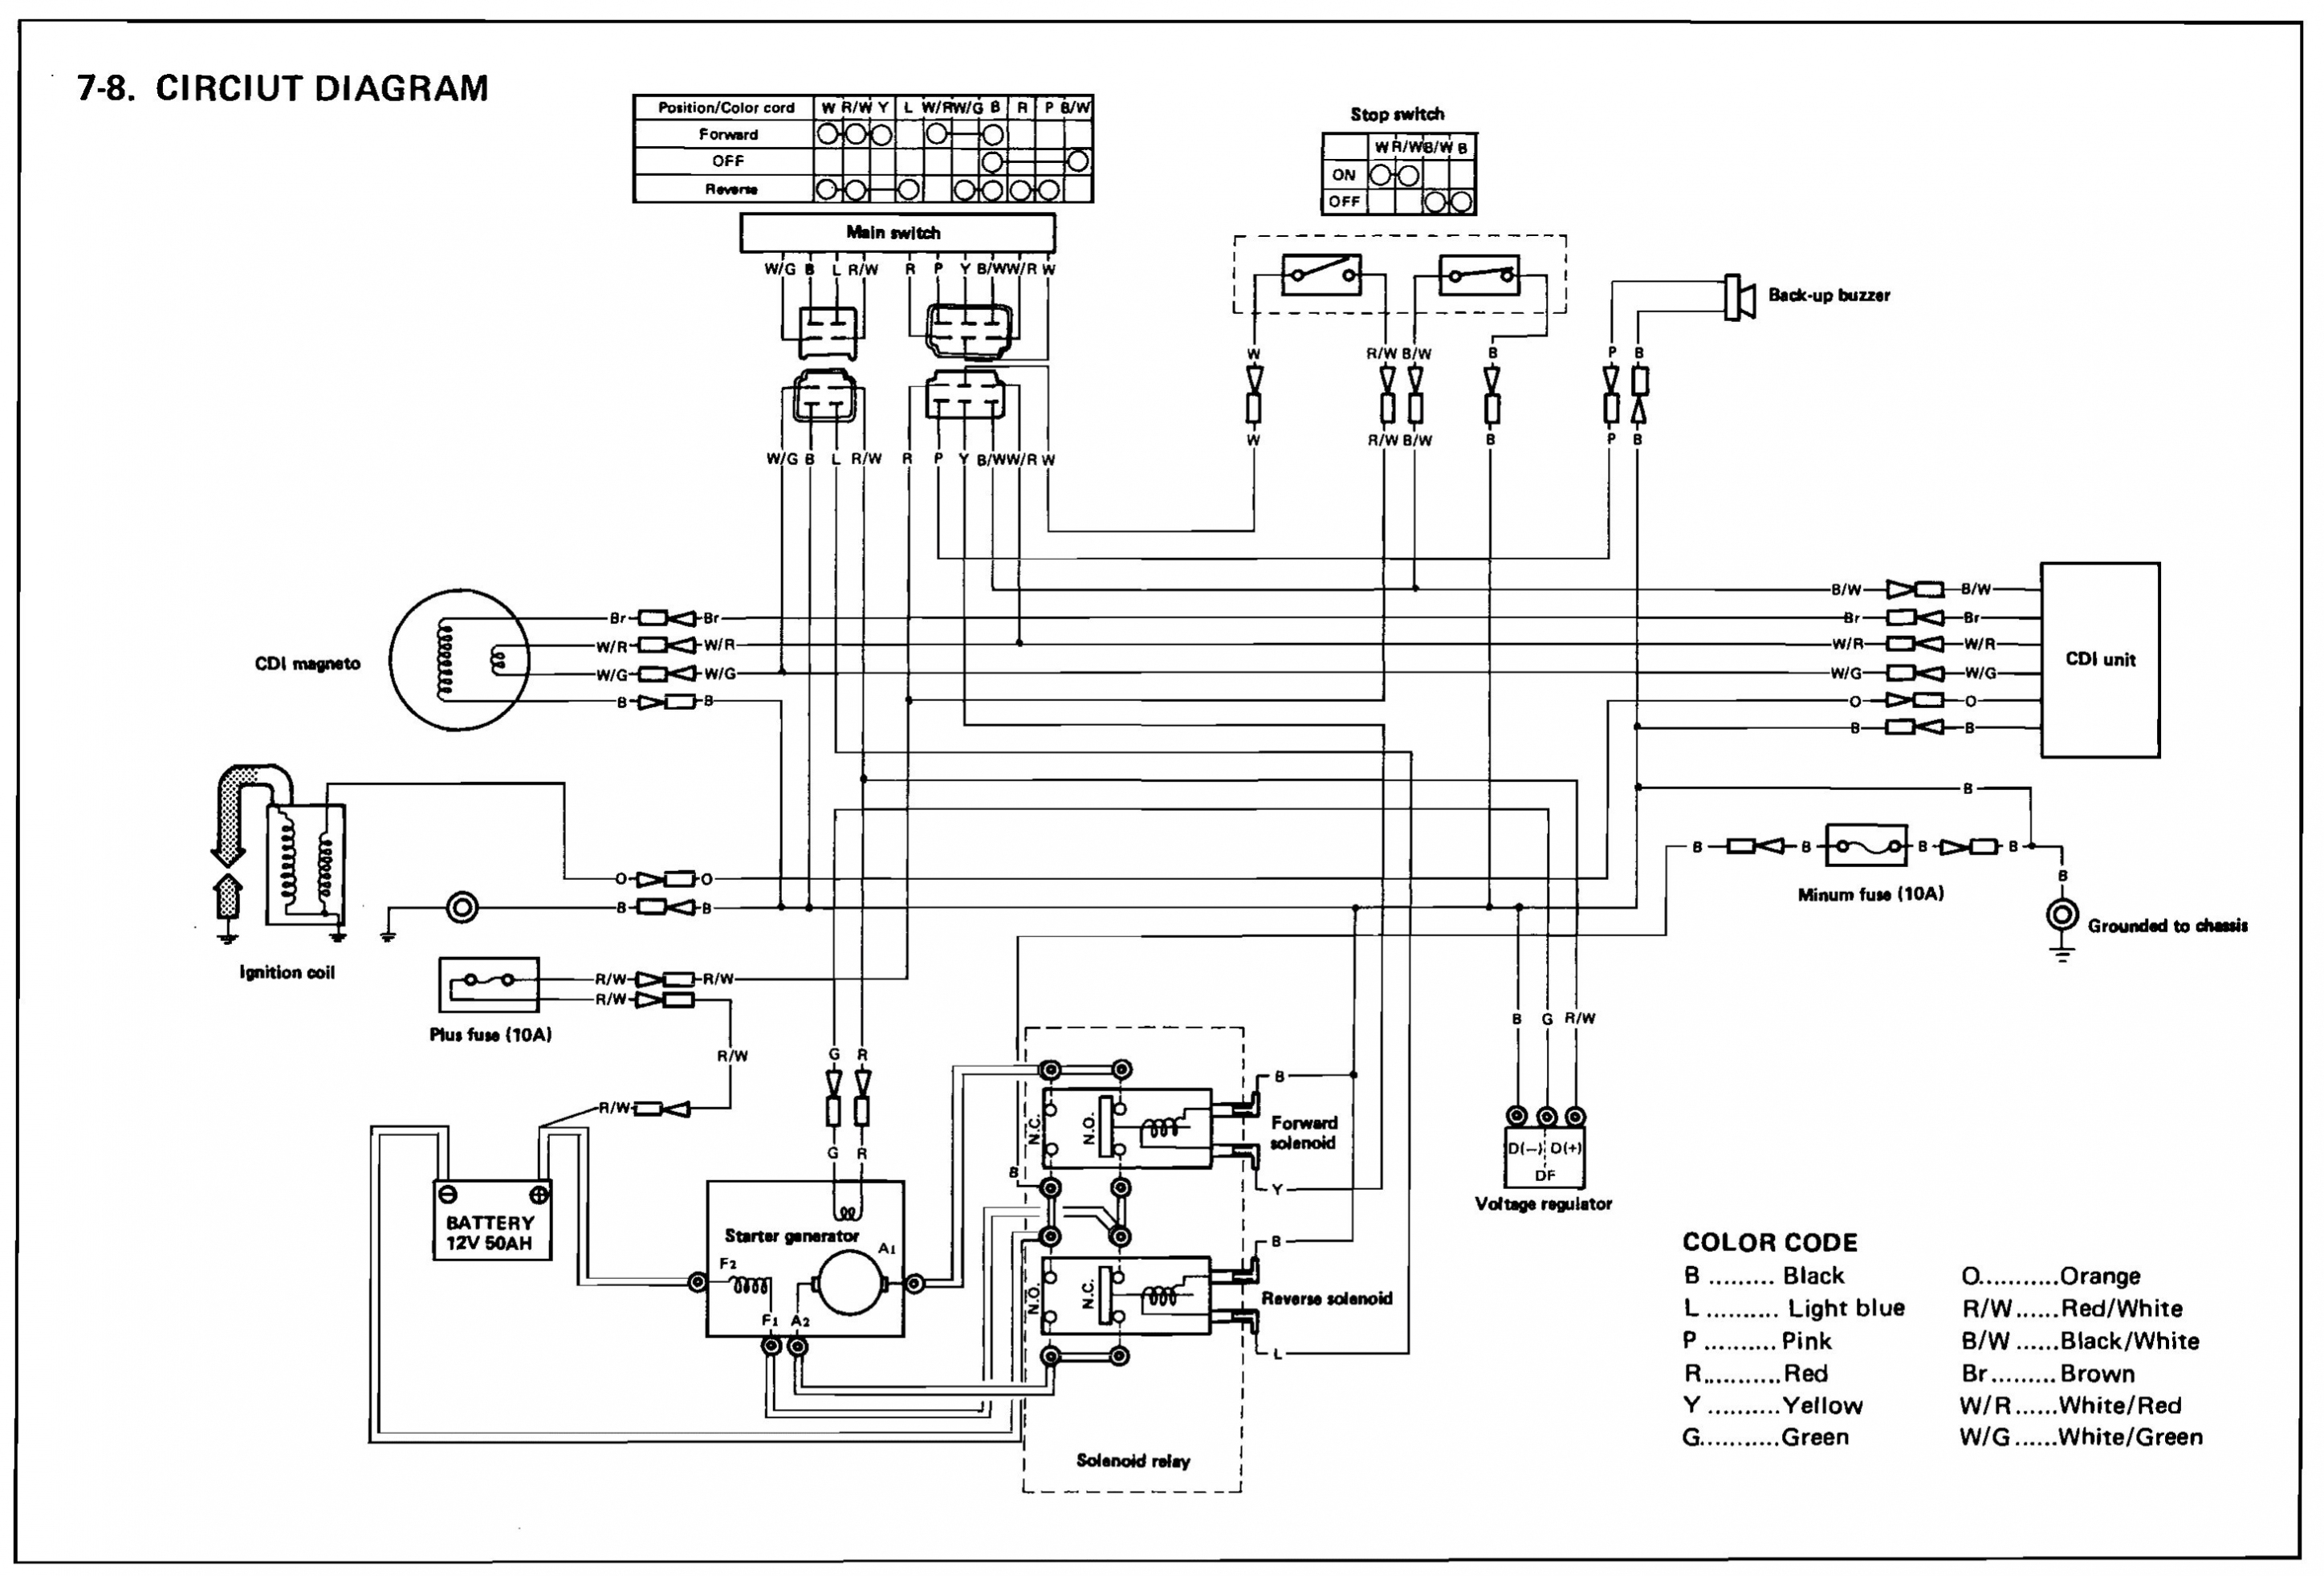 8 Hp Briggs Wiring Diagram Free Picture | Wiring Library - Briggs And Stratton Voltage Regulator Wiring Diagram